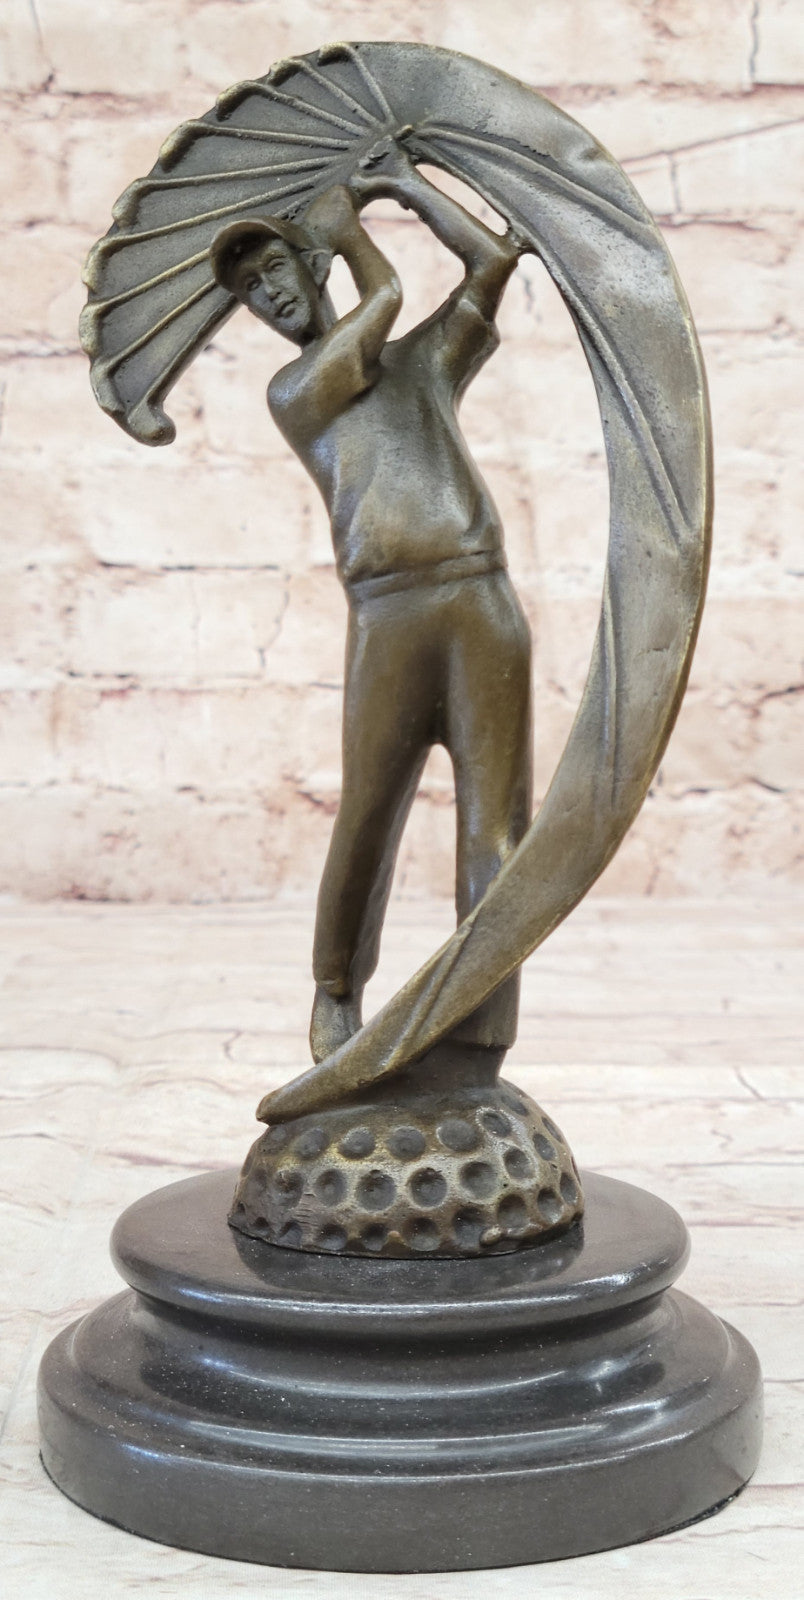 Aldo Vitaleh Male Golfer Sculpture: A Golf Art Collectible Figure